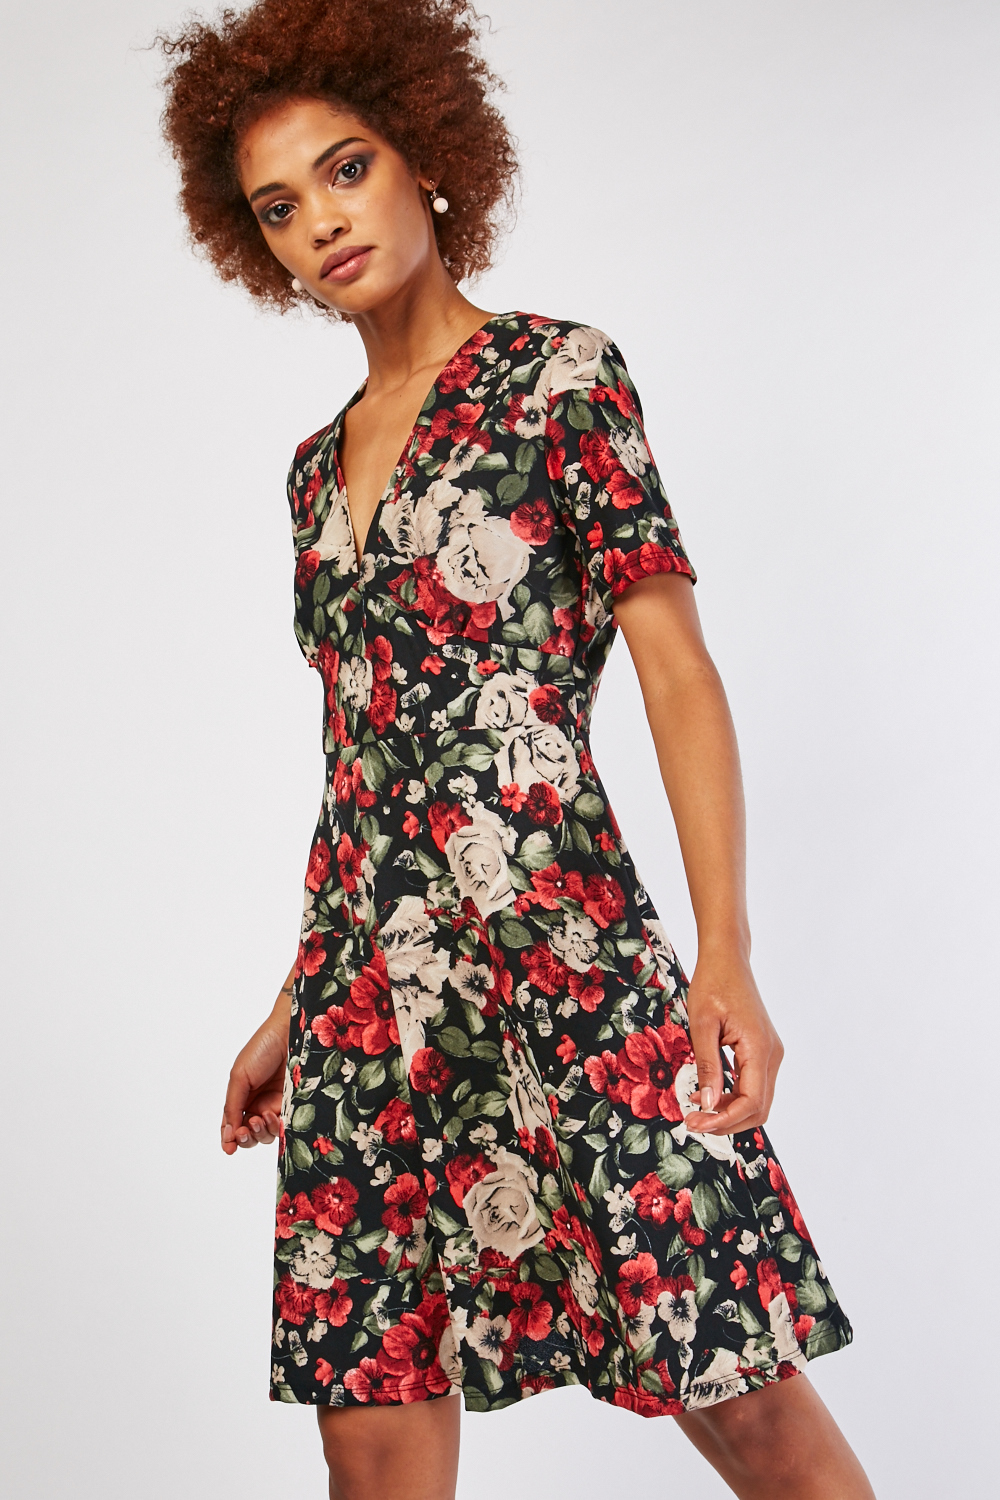 V-Neck Flower Print Dress - Just $7